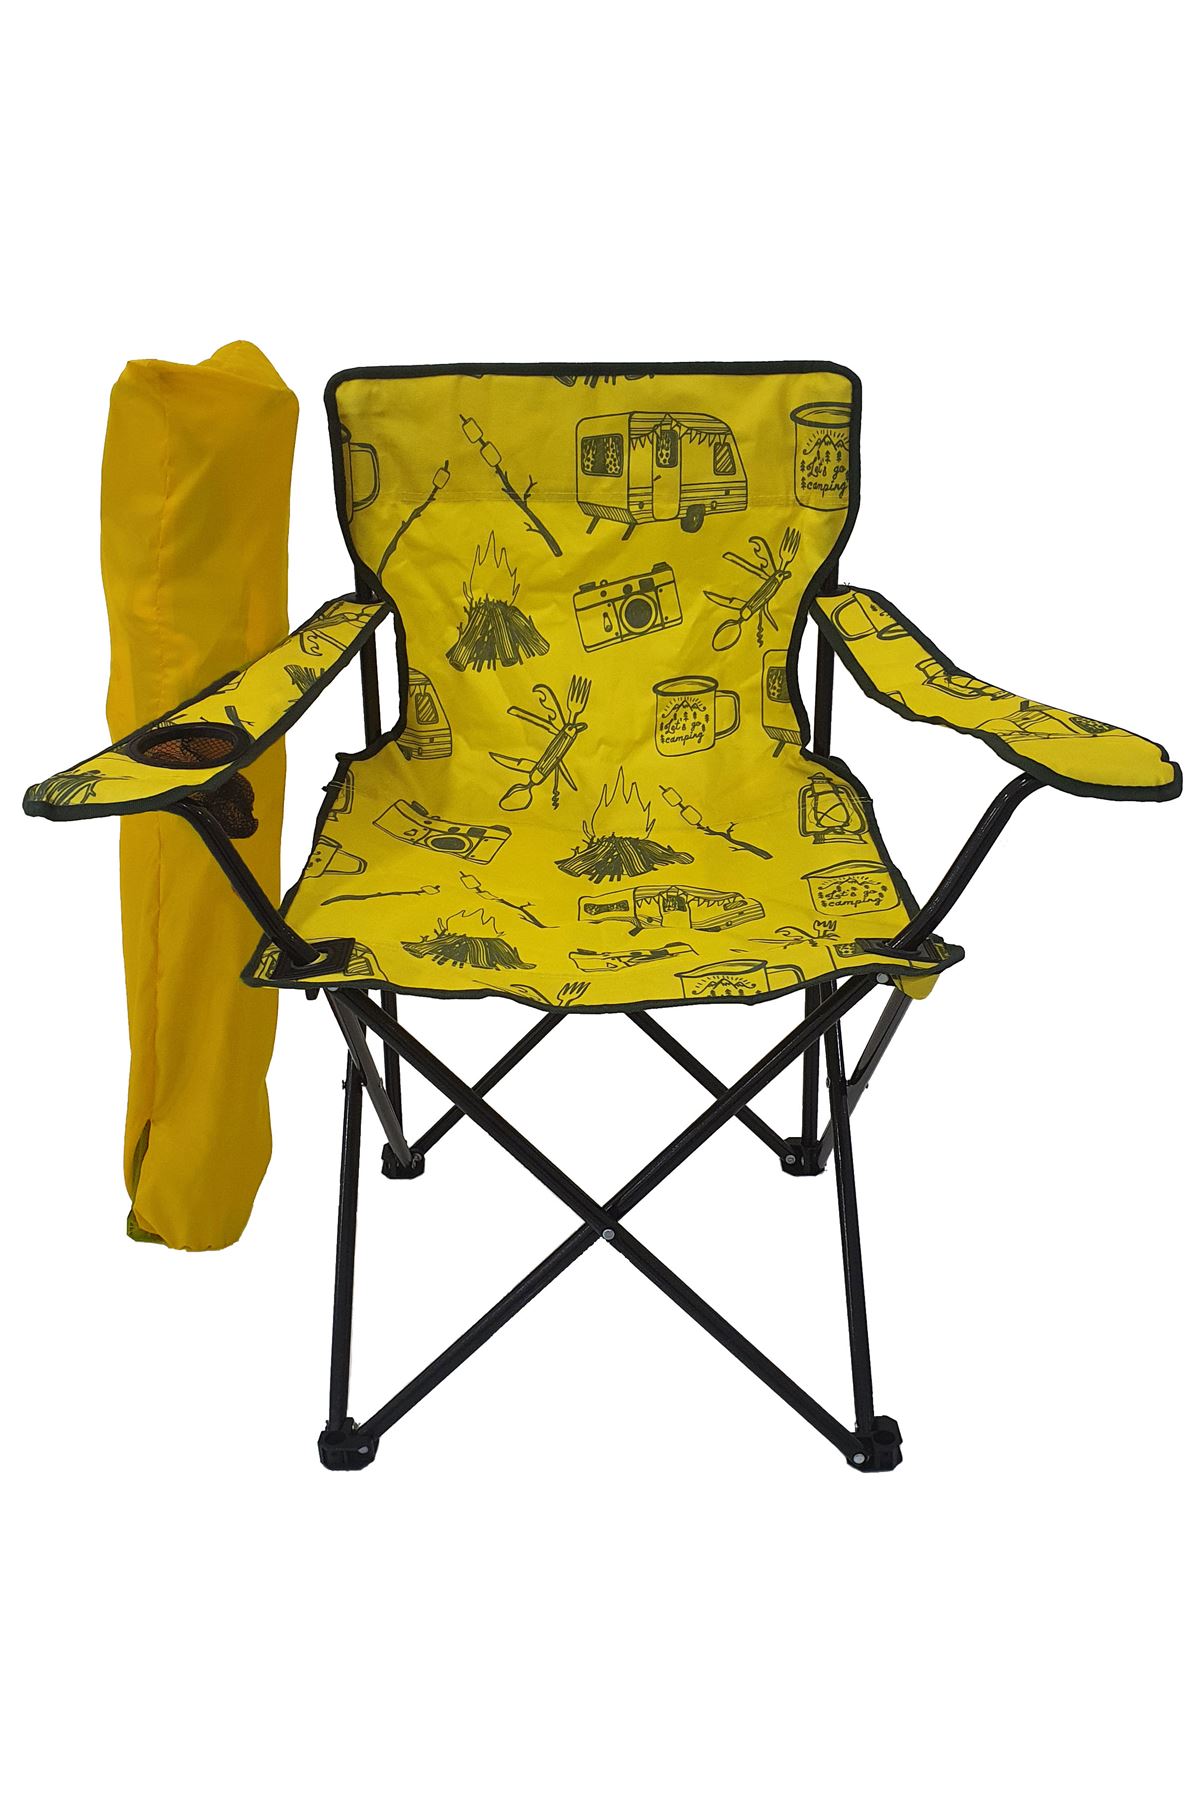 Bofigo 3 Pcs Camping Chair Folding Chair Garden Chair Picnic Beach Chair Patterned Mixed